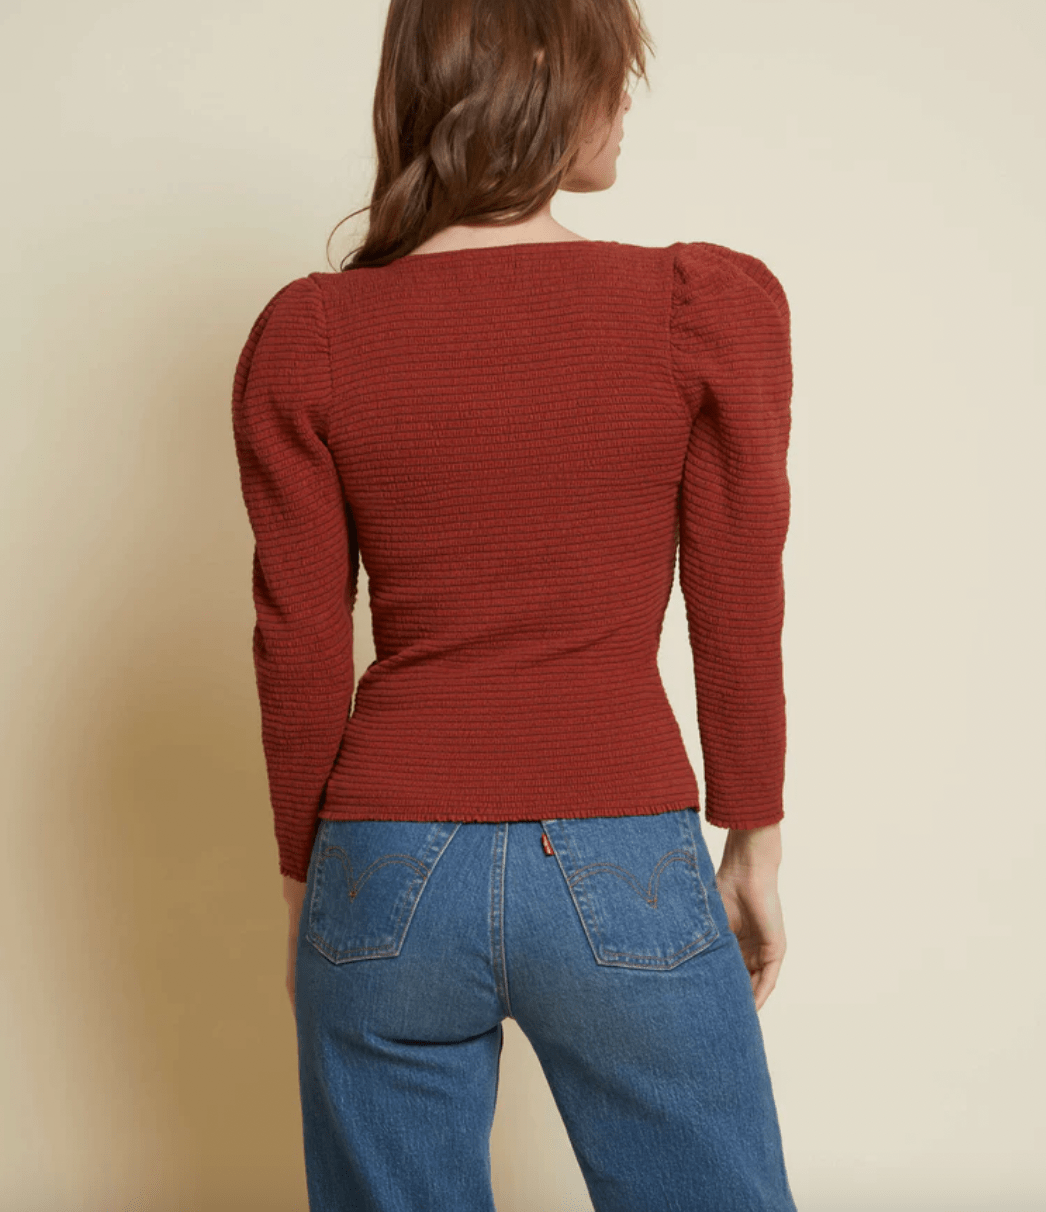 Nation Alexandra Long Sleeve Top in Red Clay - Estilo Boutique